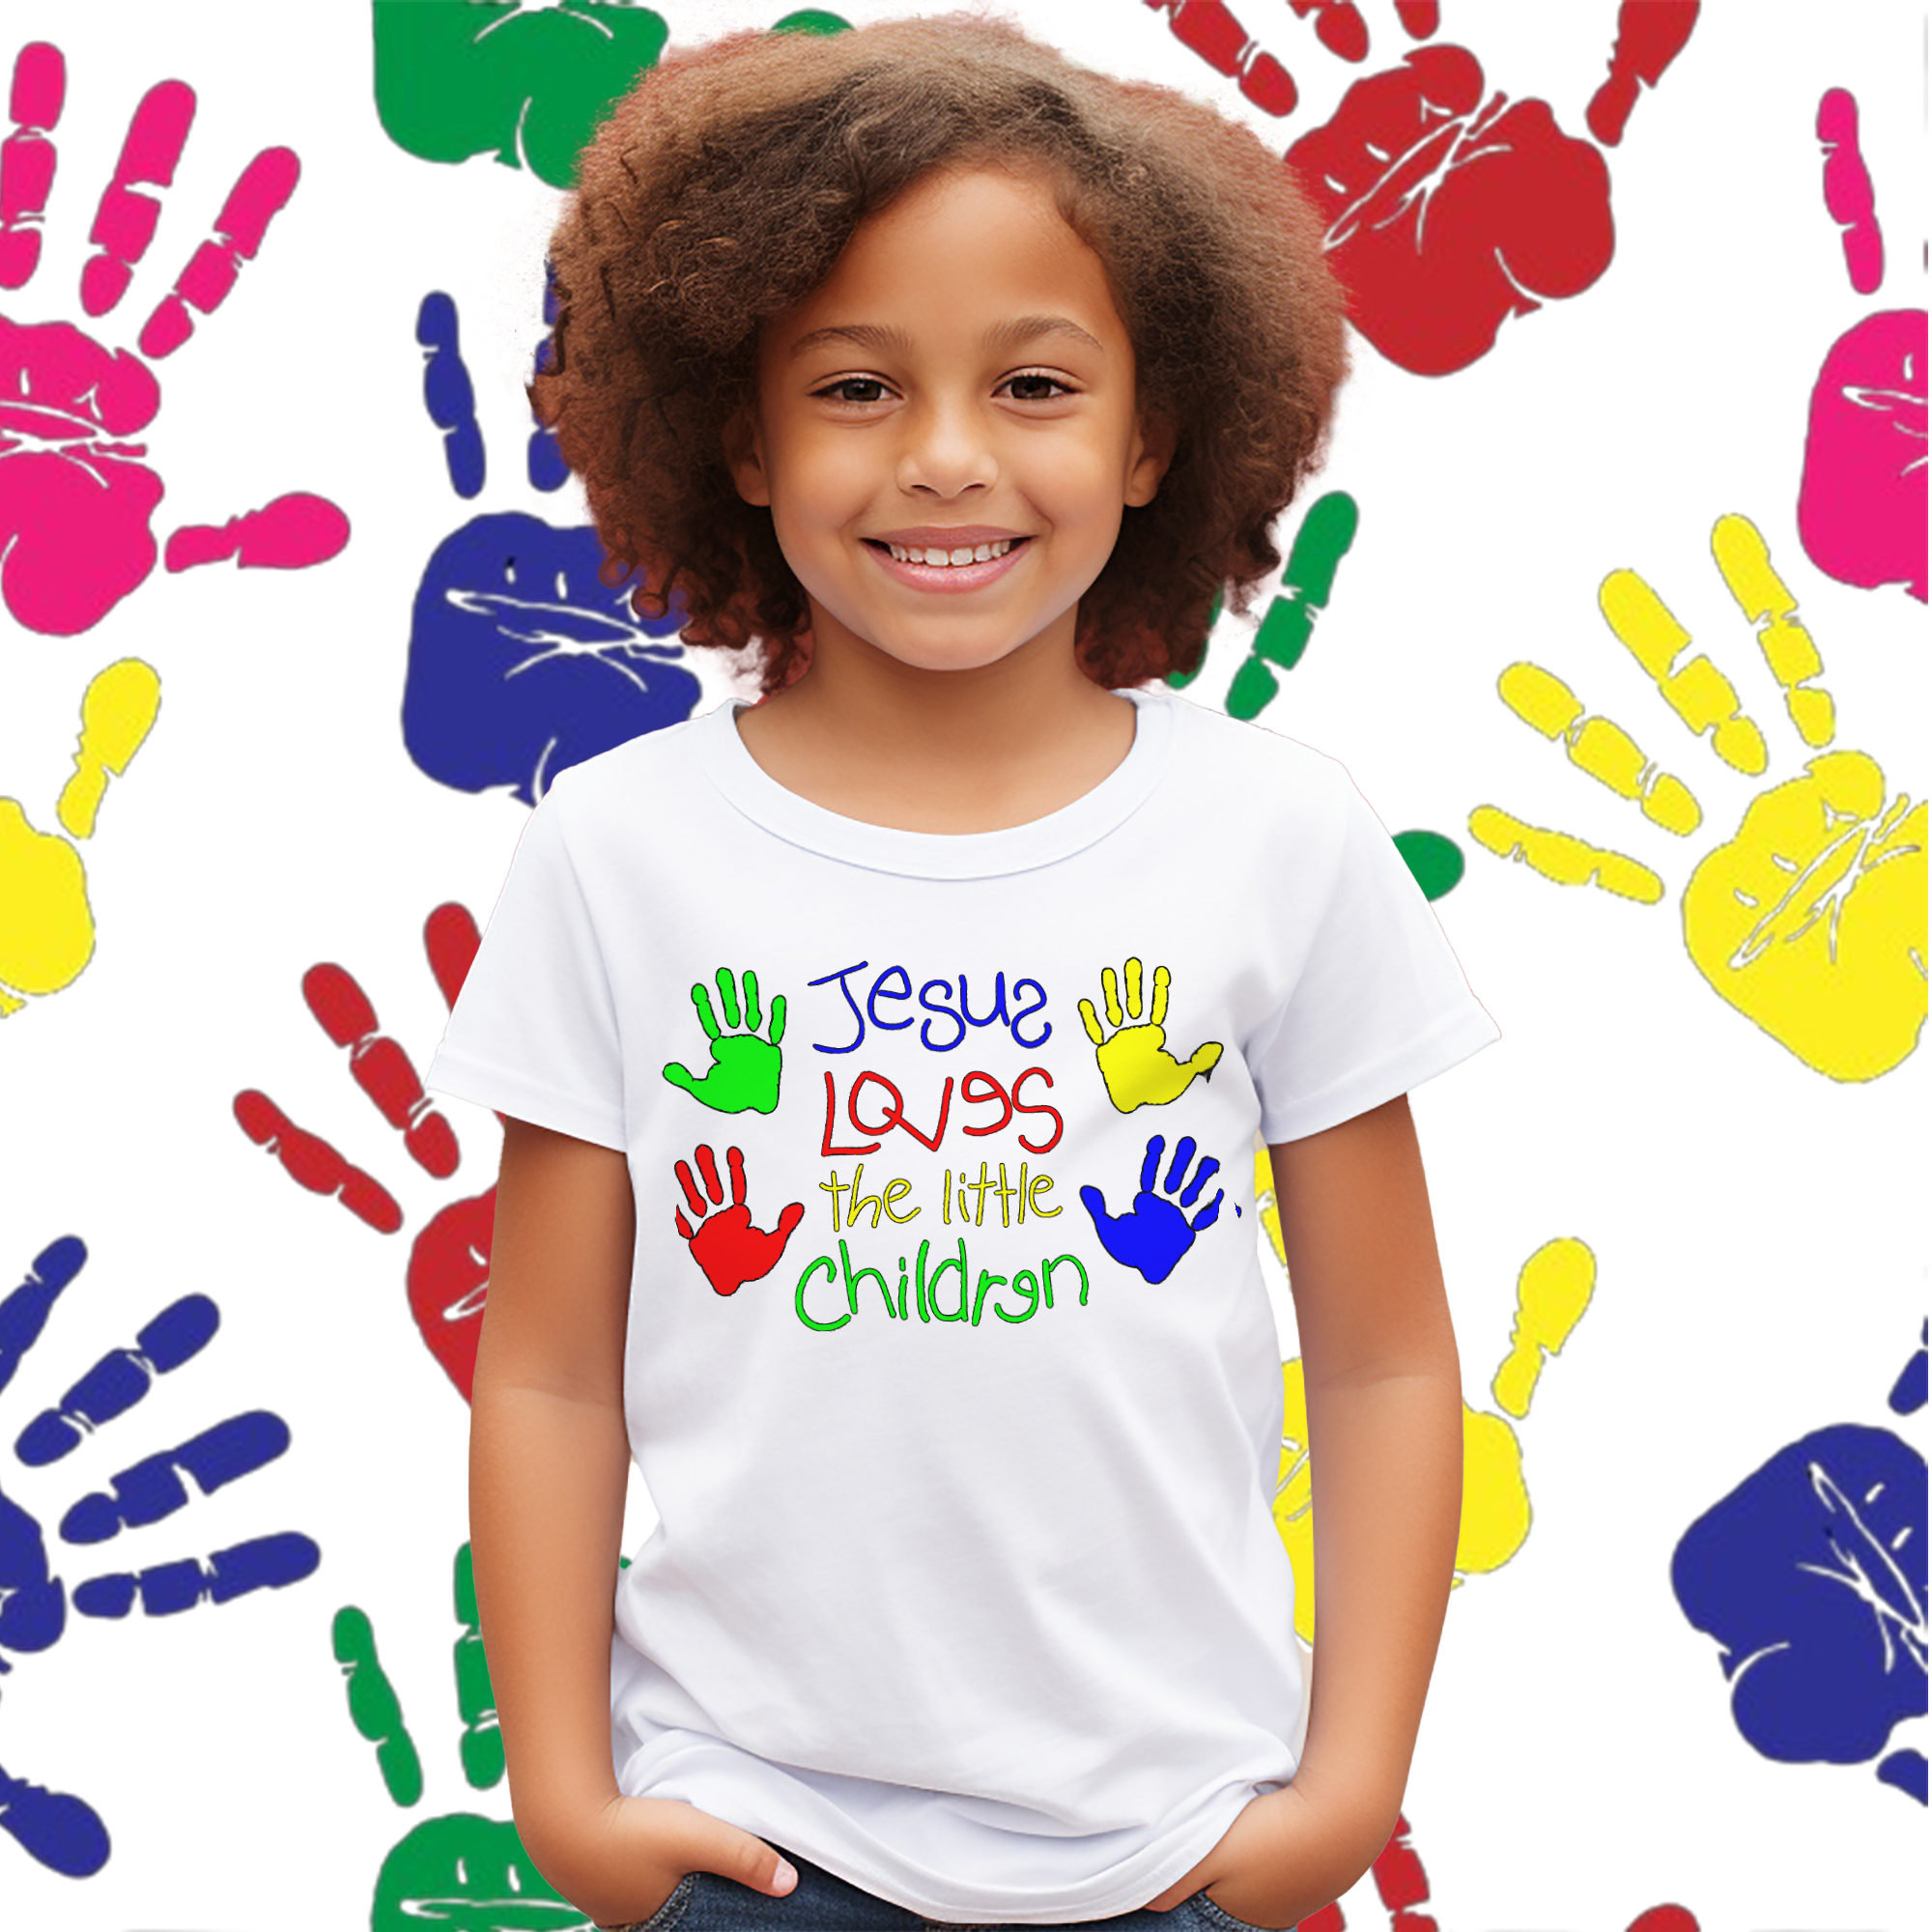 Jesus Loves the Little Children Toddler's Fine Jersey Tee Color: Light Blue Size: 2T Jesus Passion Apparel